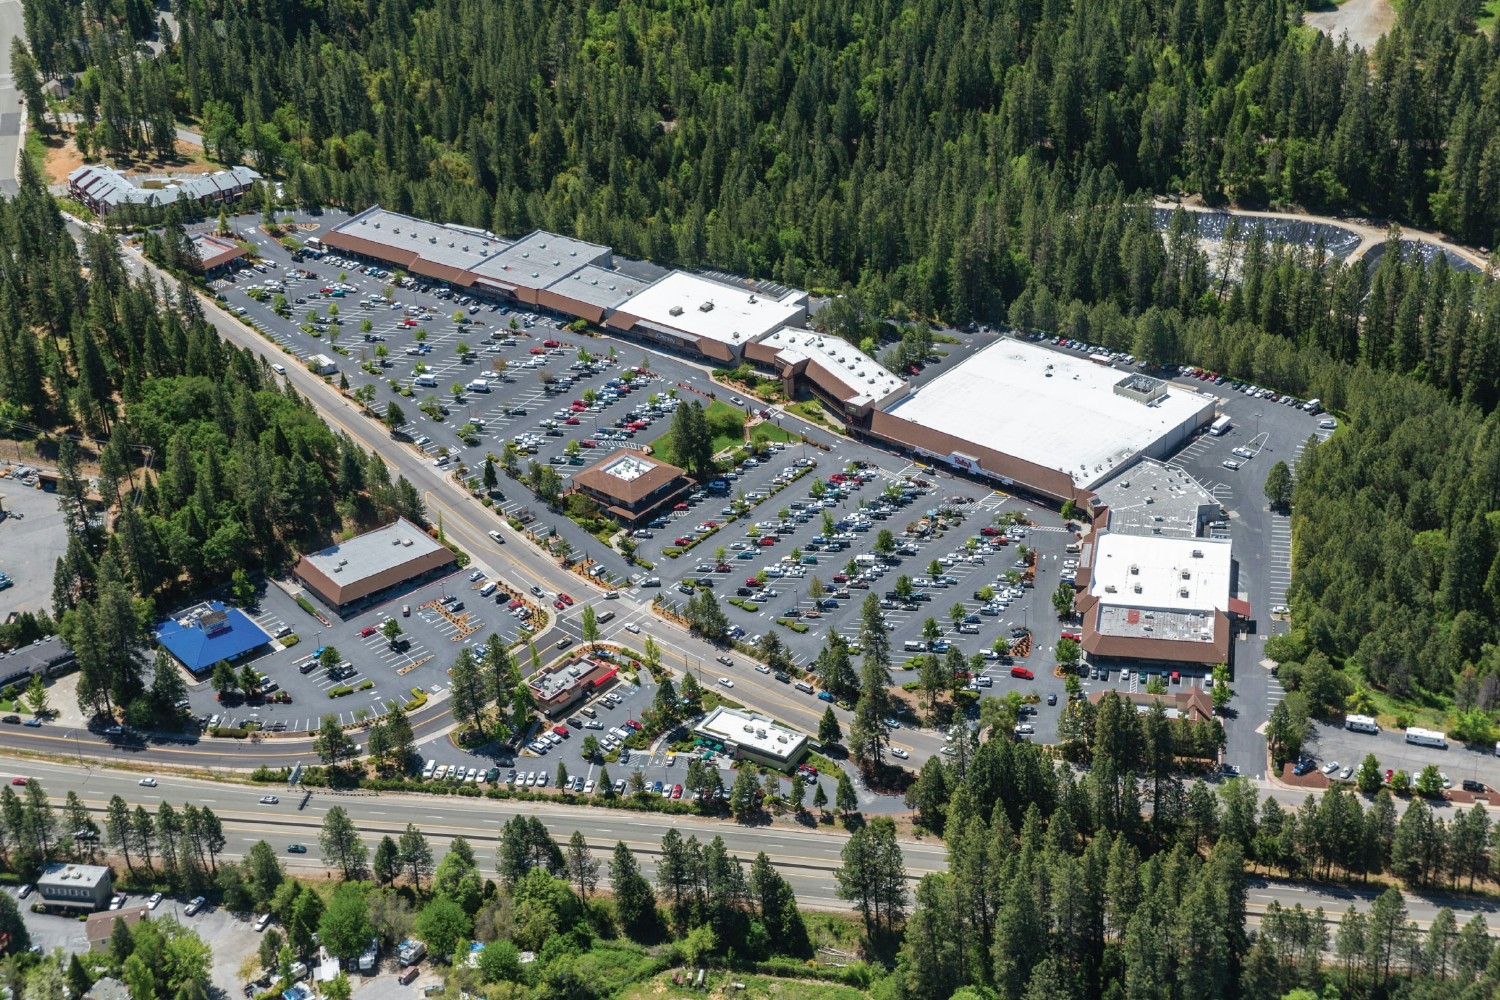 Pine Creek shopping center nestled in Grass Valley, California.